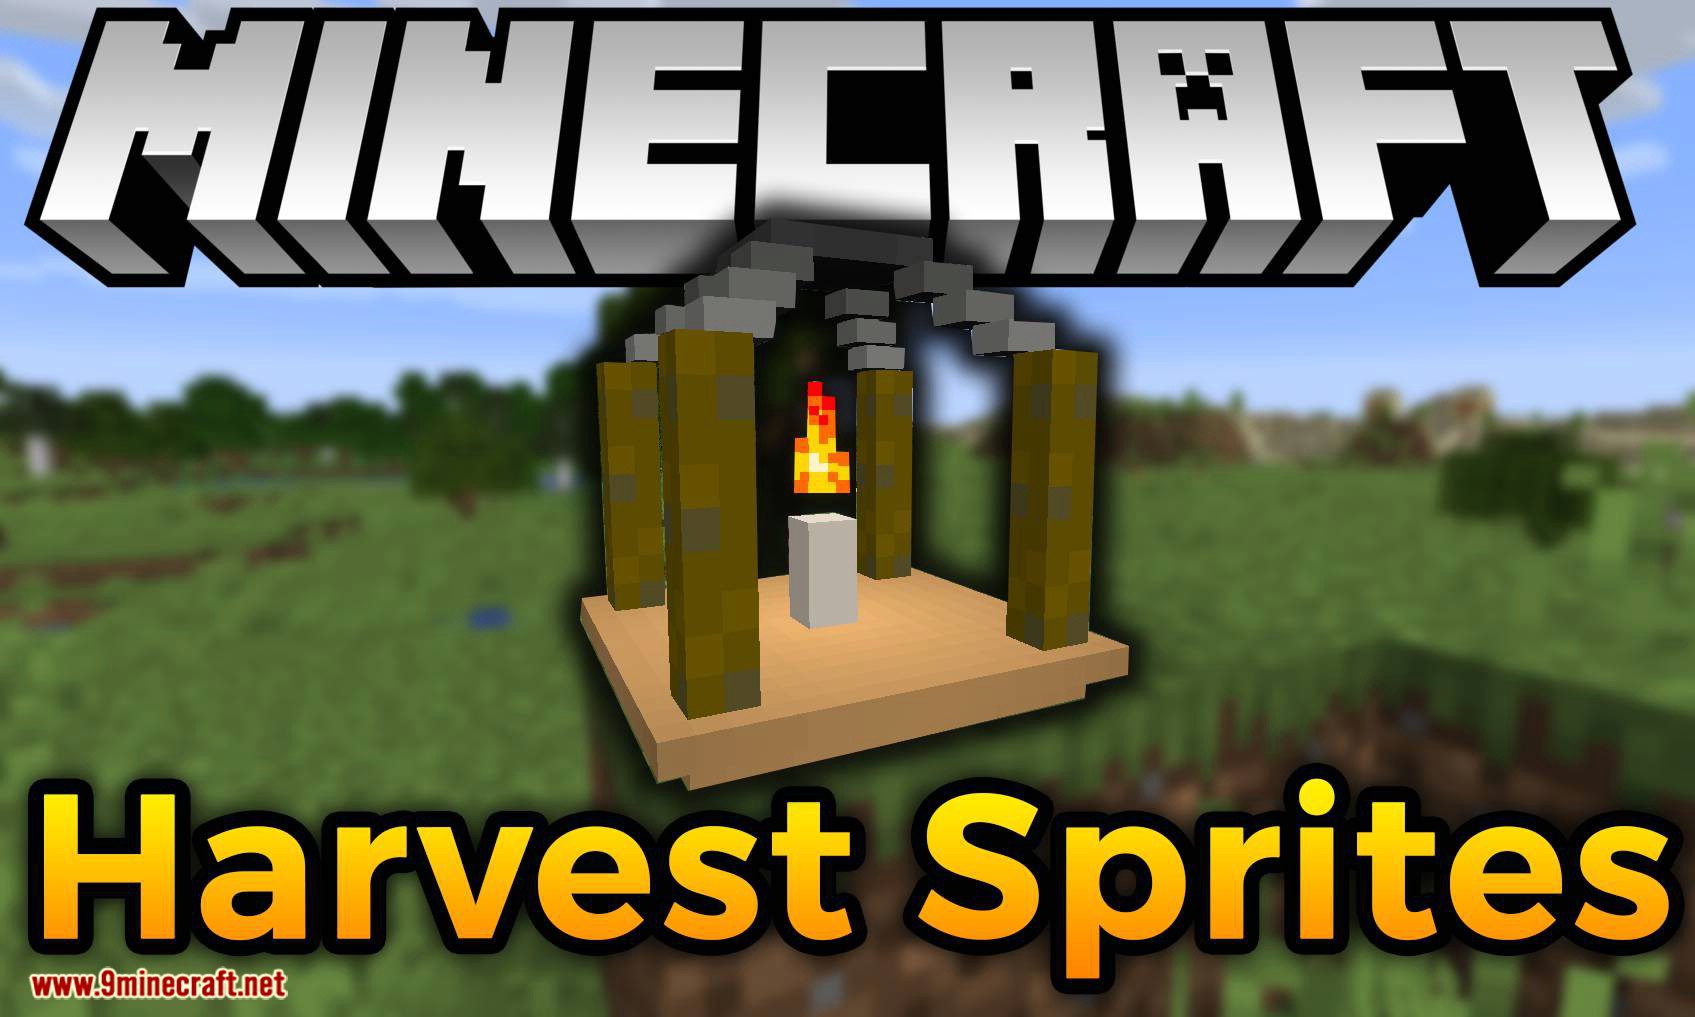 Harvest Sprites mod for minecraft logo